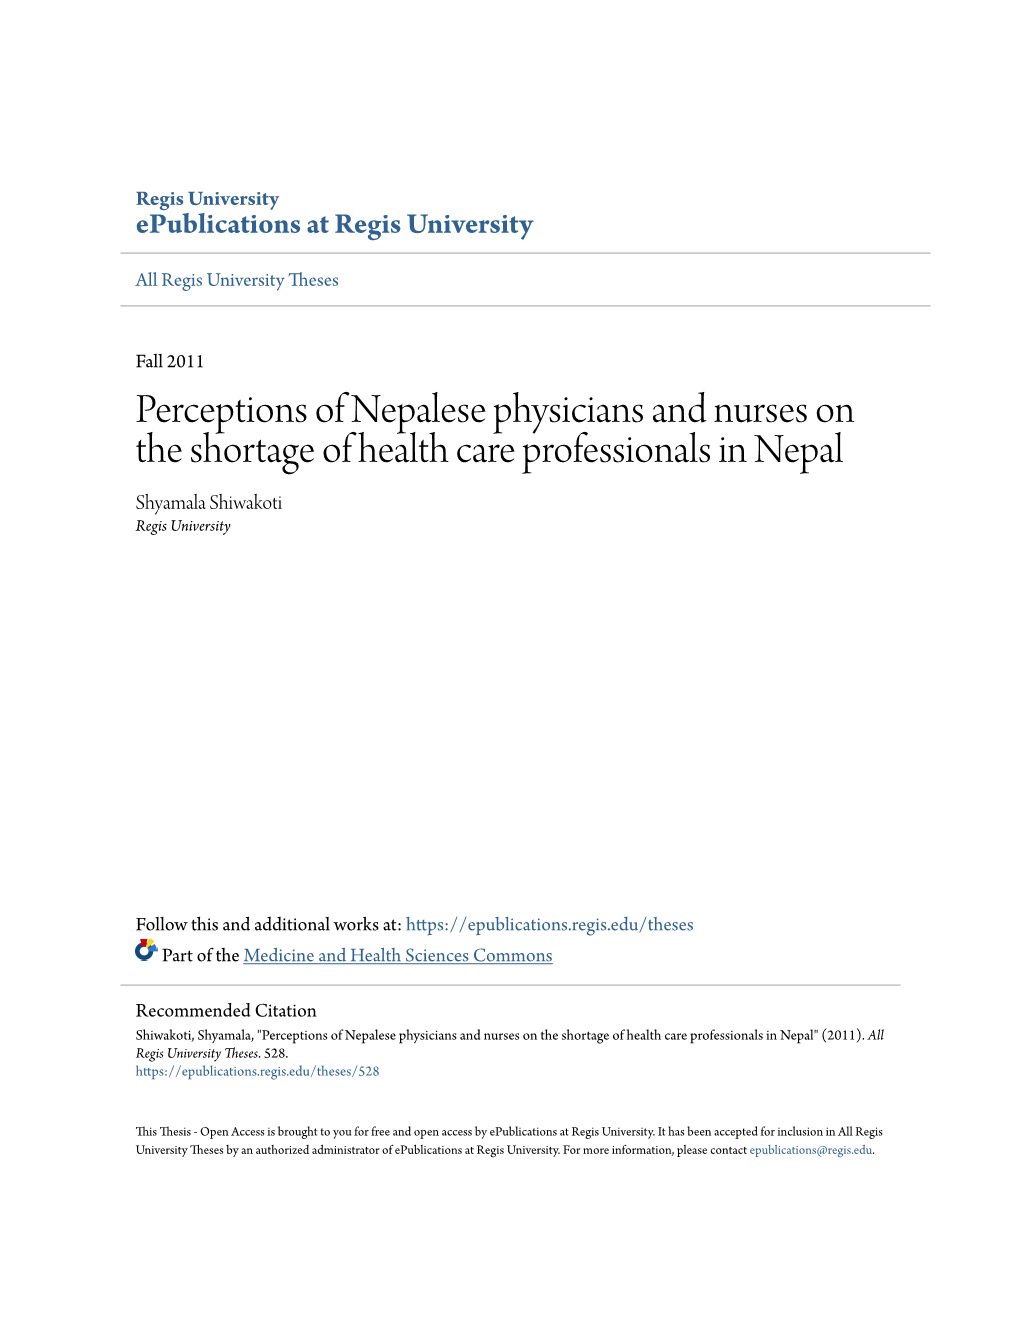 Perceptions of Nepalese Physicians and Nurses on the Shortage of Health Care Professionals in Nepal Shyamala Shiwakoti Regis University